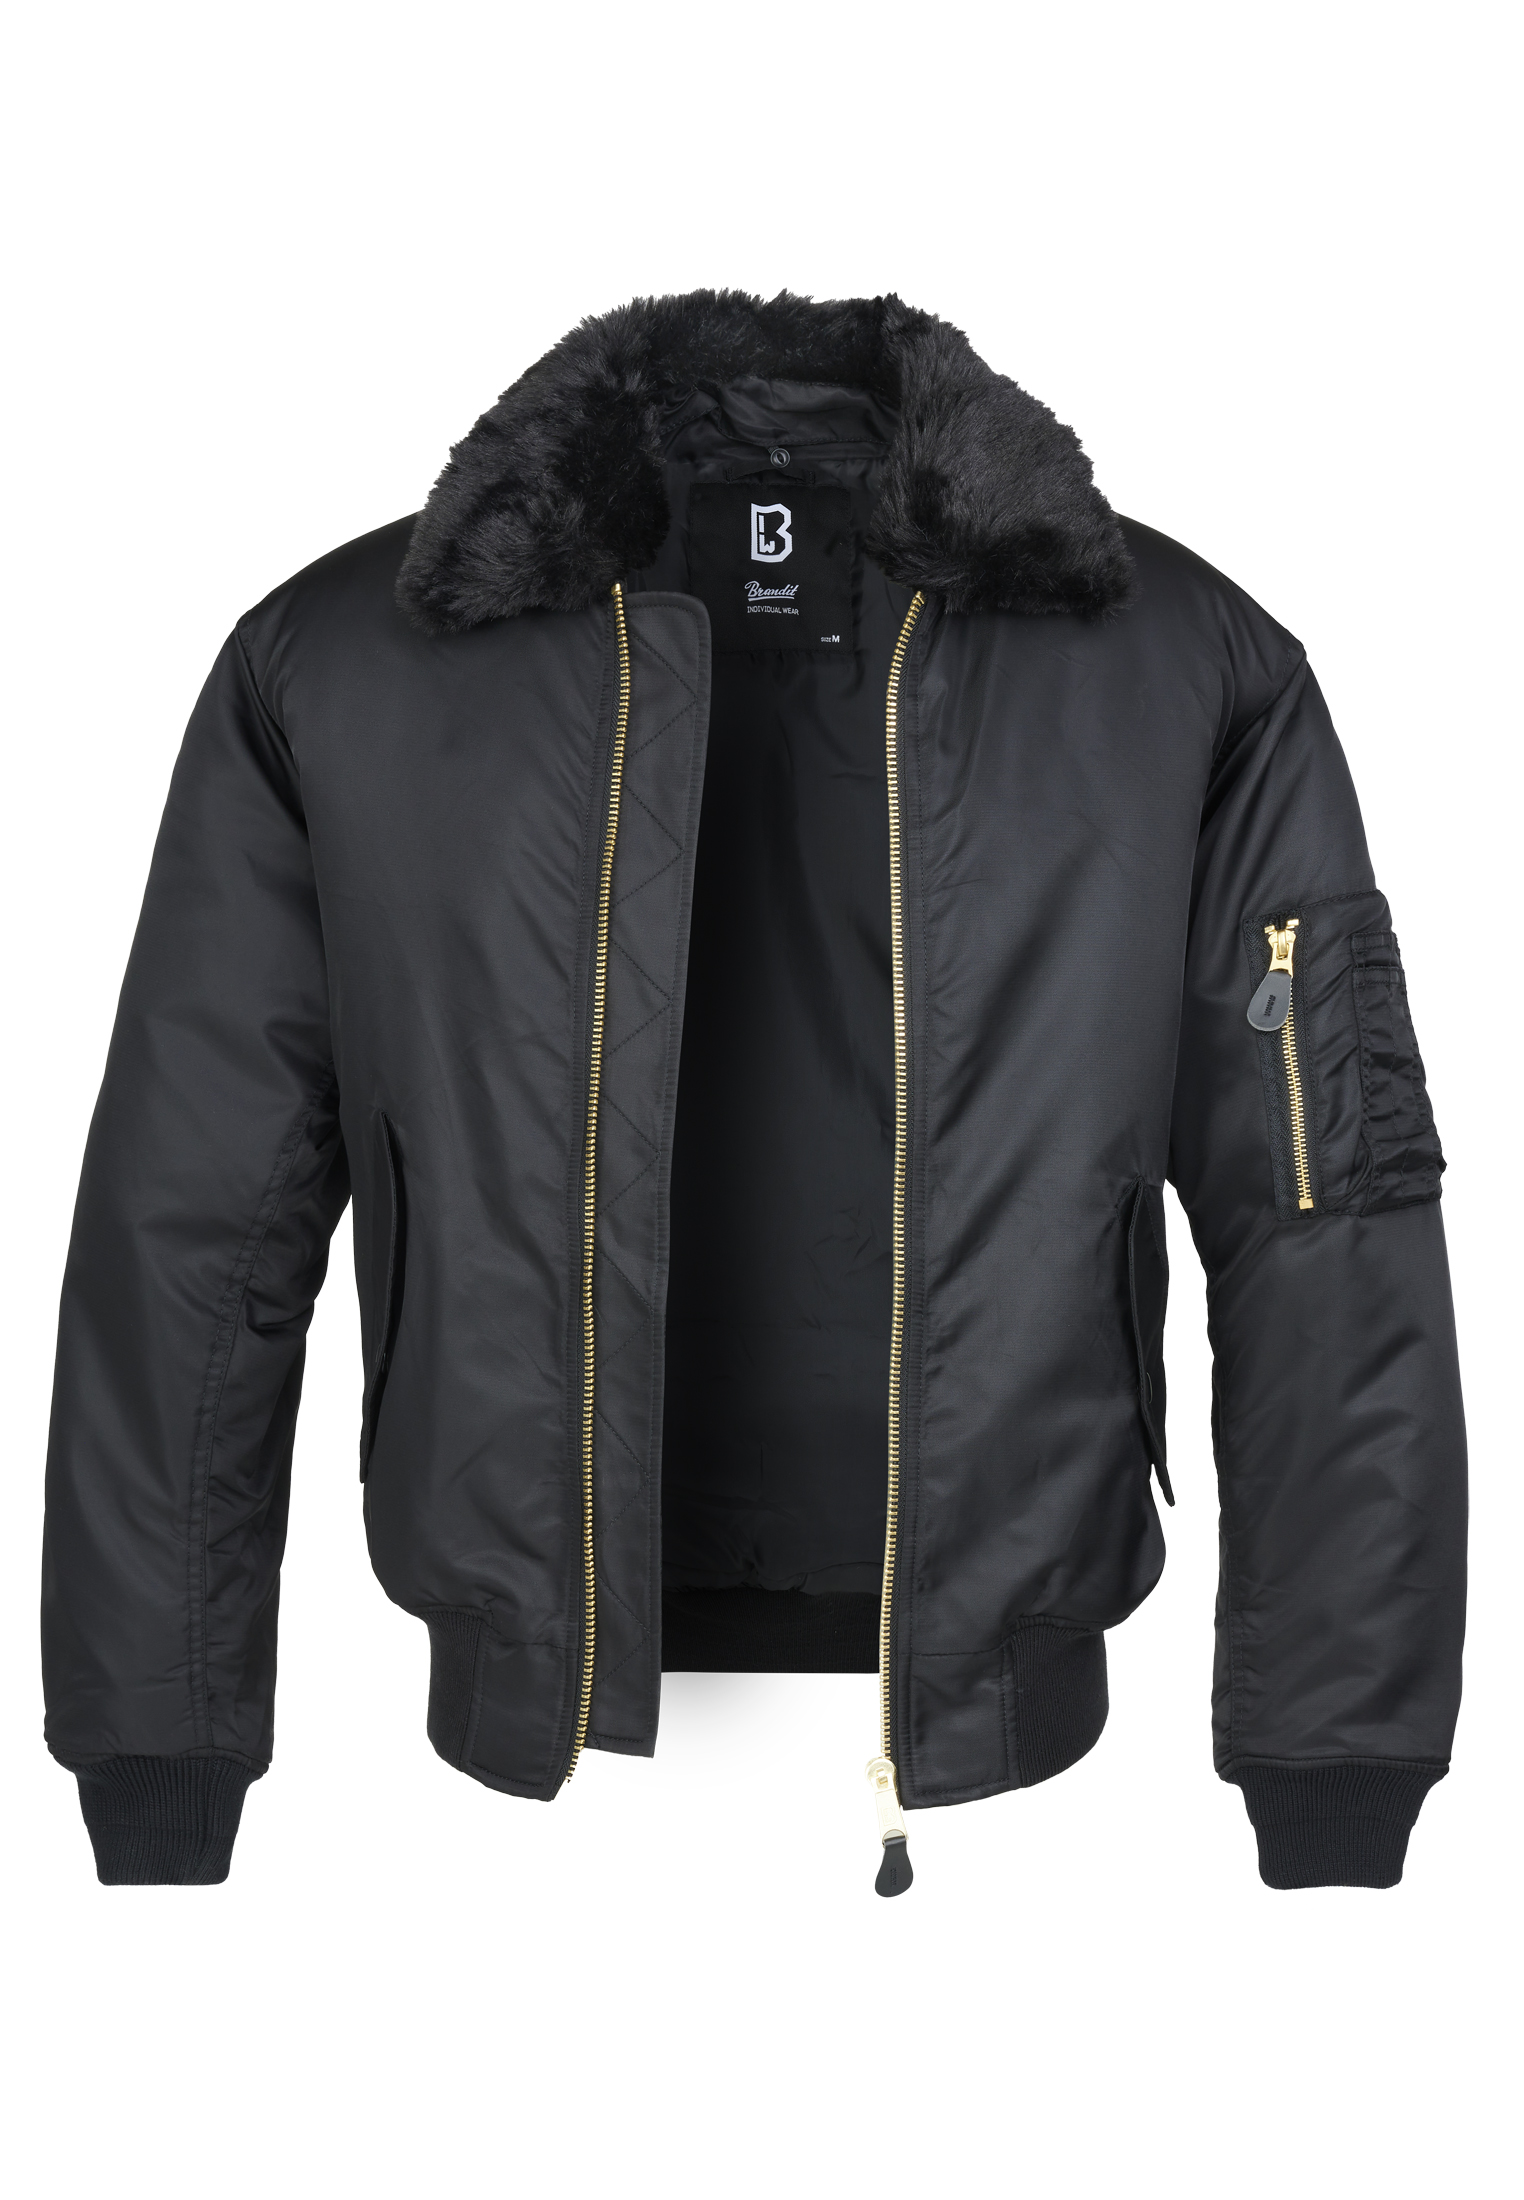 Jacken MA2 Jacket Fur Collar in Farbe black/darkcamo